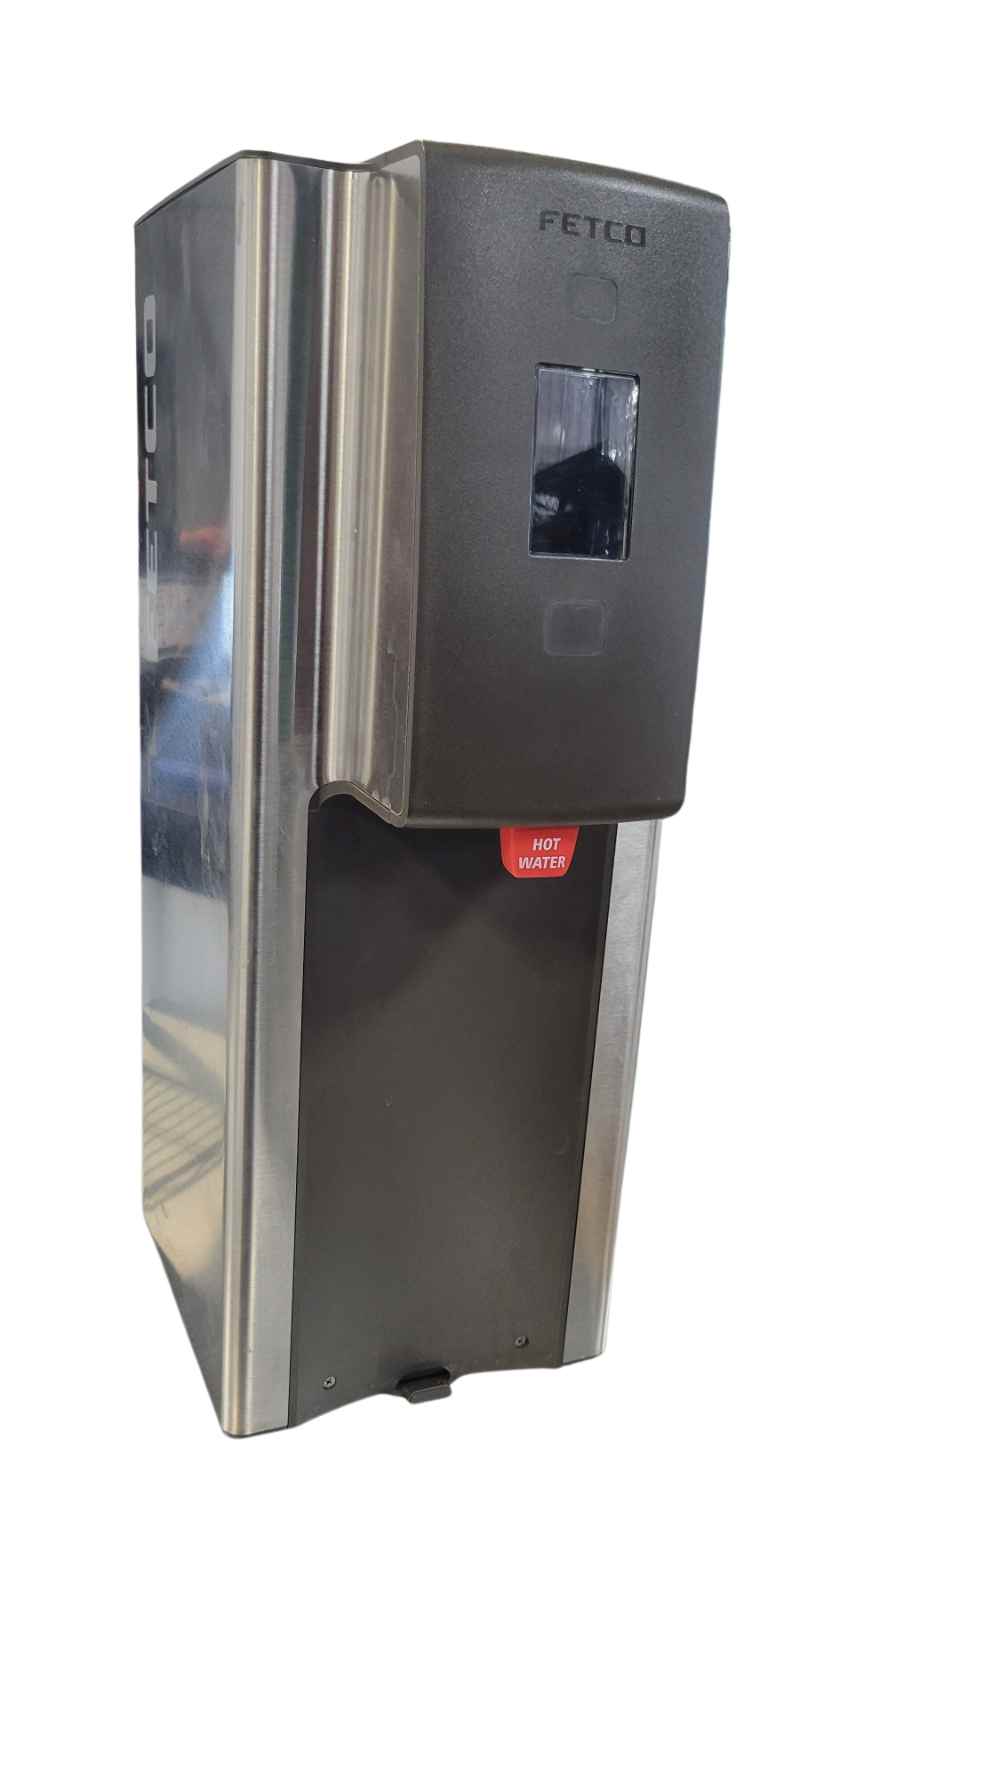 Thumbnail - Fetco HWD-2105TOD Hot Water Dispenser